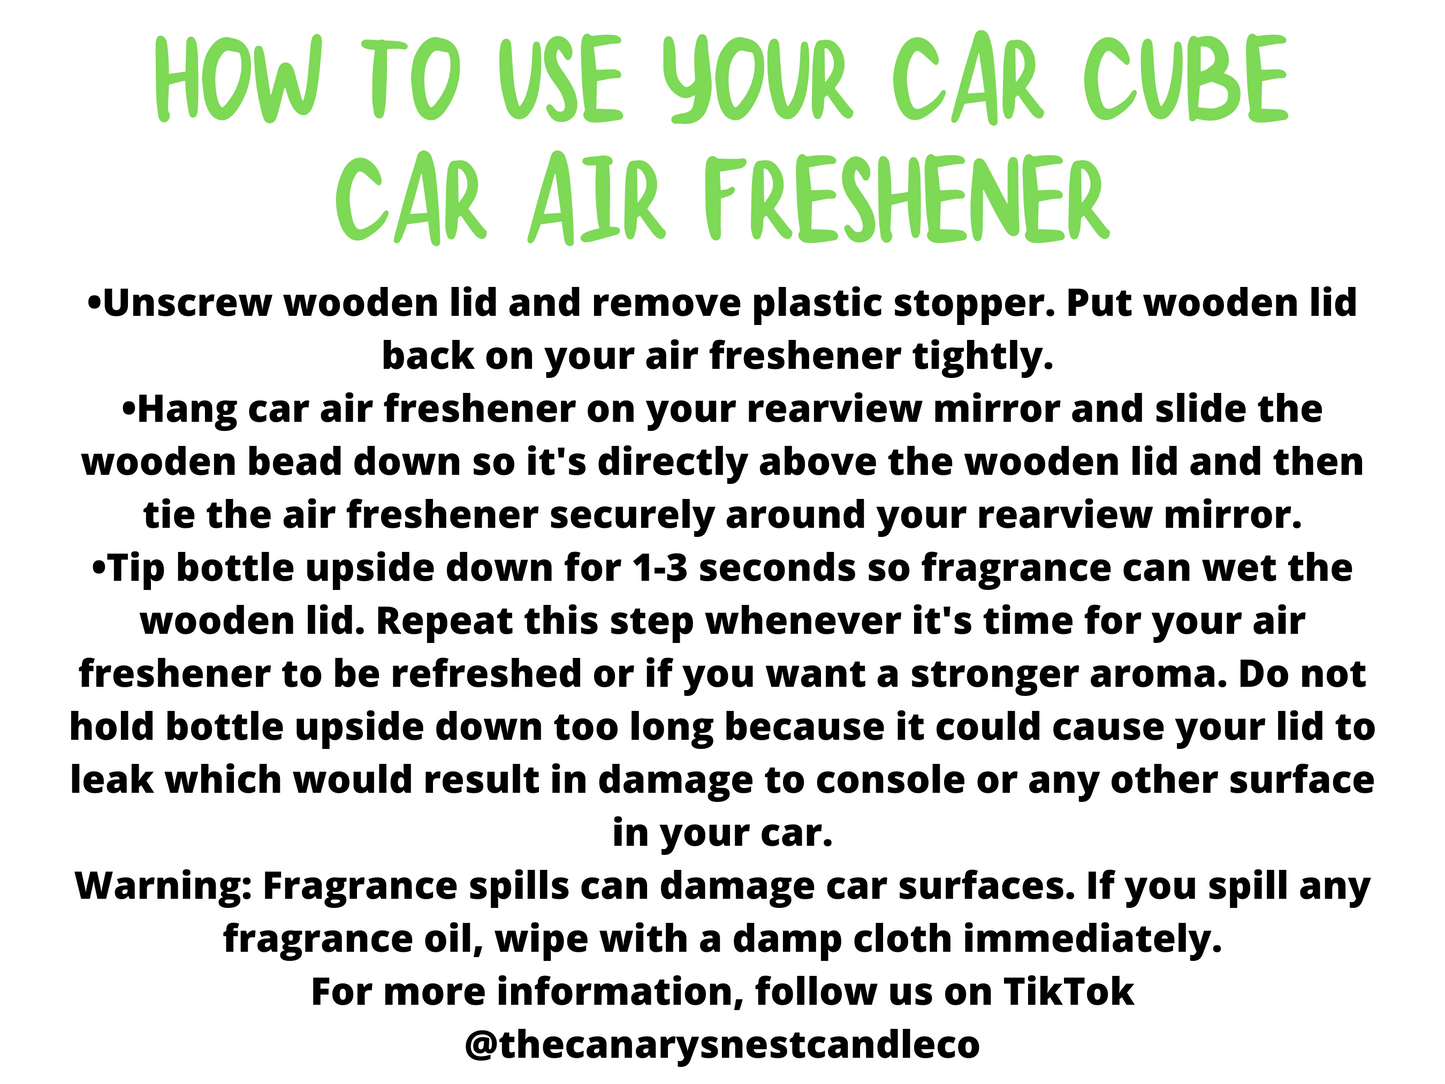 Personalized Car Cube Car Air Freshener